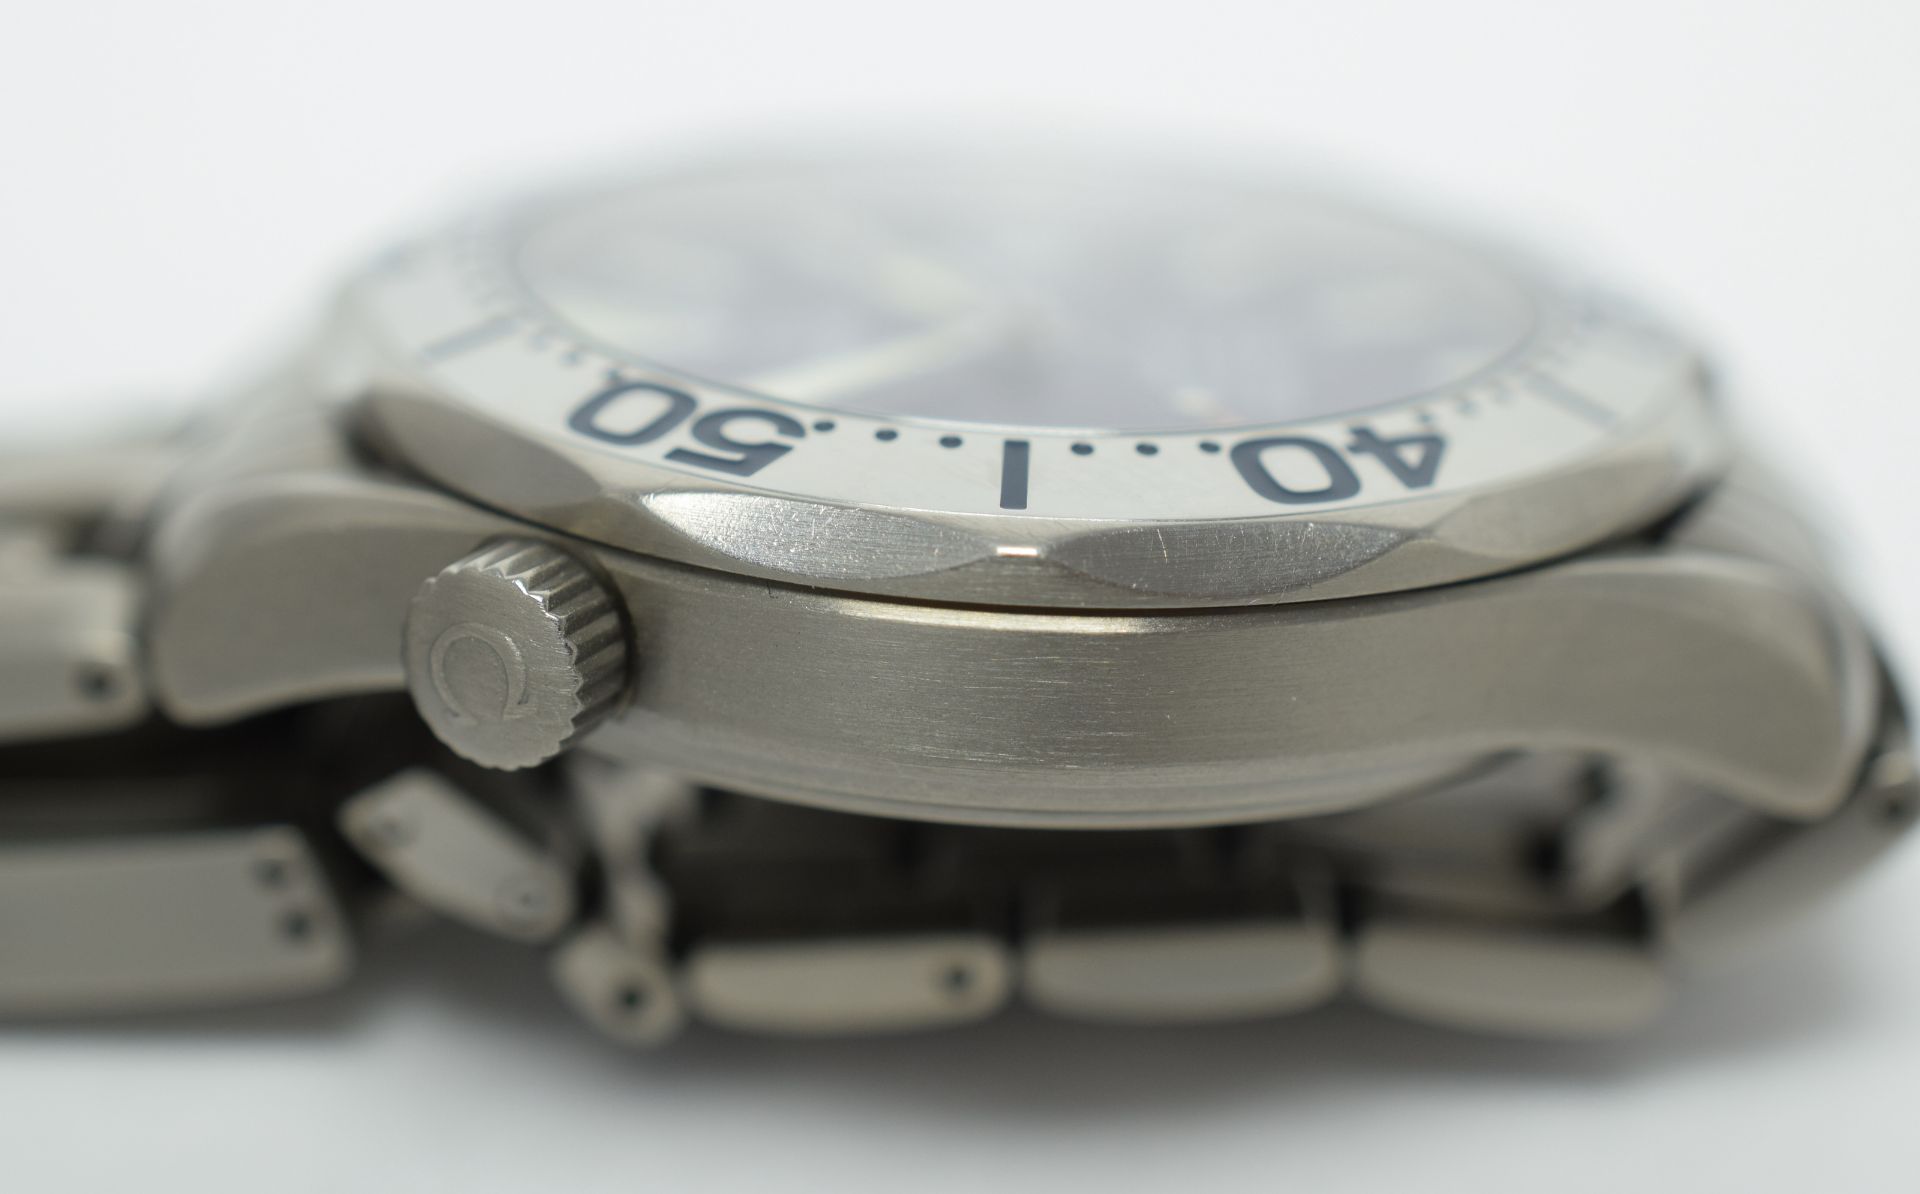 Omega Seamaster Professional Chronometer 300mts/1000ft In Titanium On Titanium Bracelet - Image 9 of 10